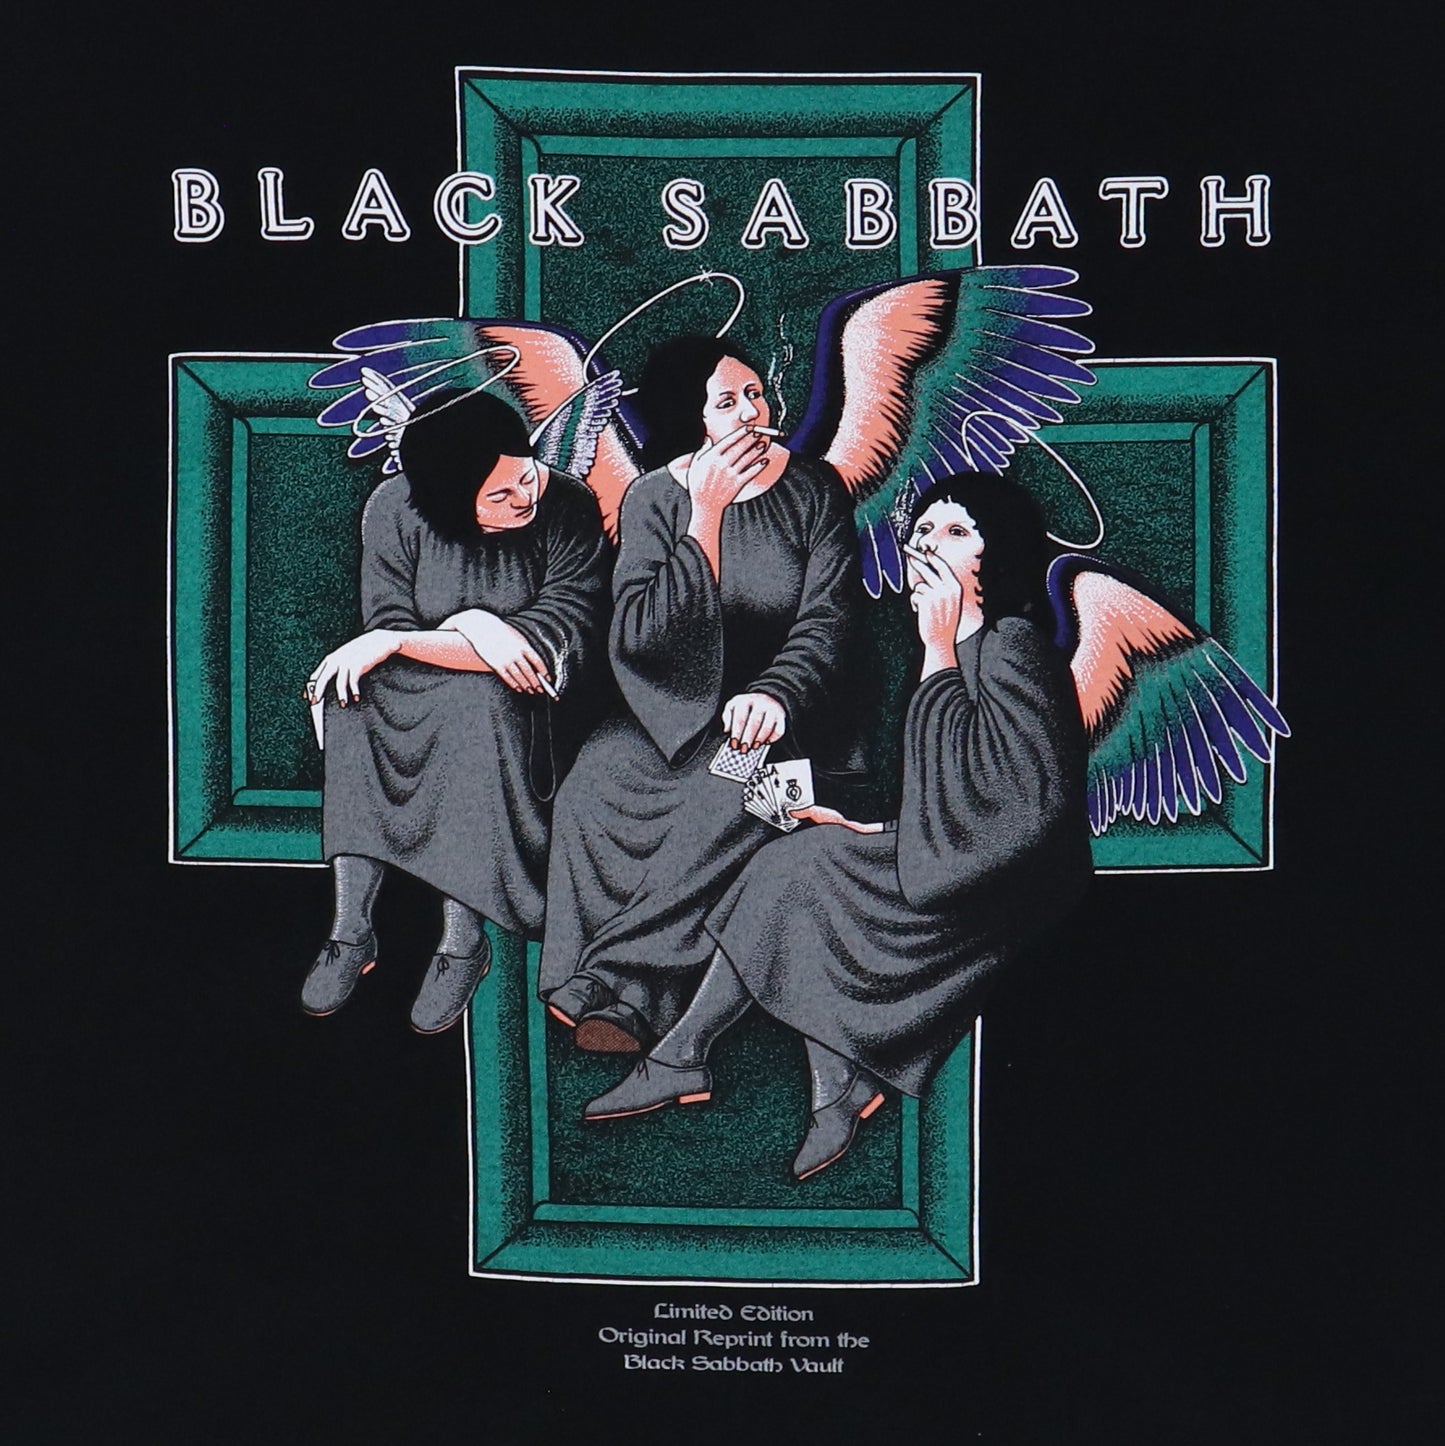 1990s Black Sabbath Heaven And Hell Shirt